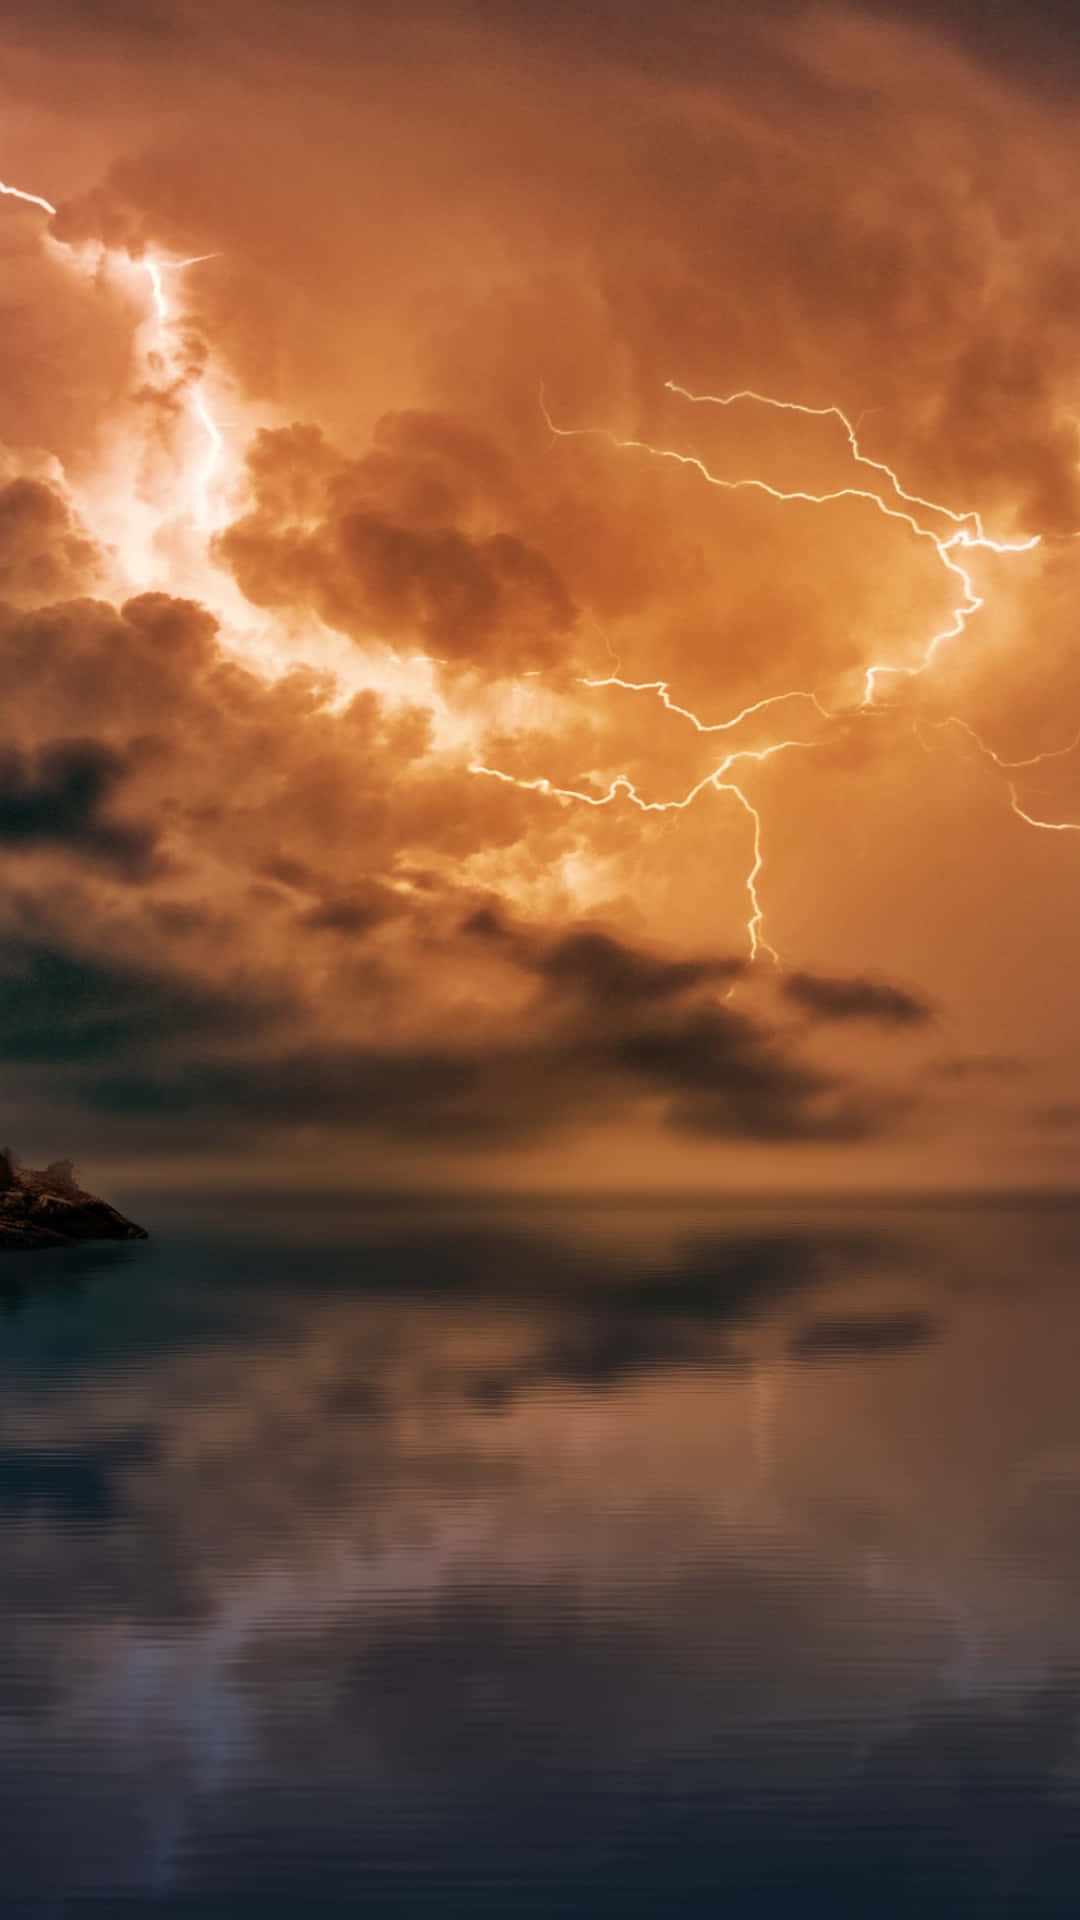 Dramatic Lightning Over Water Wallpaper